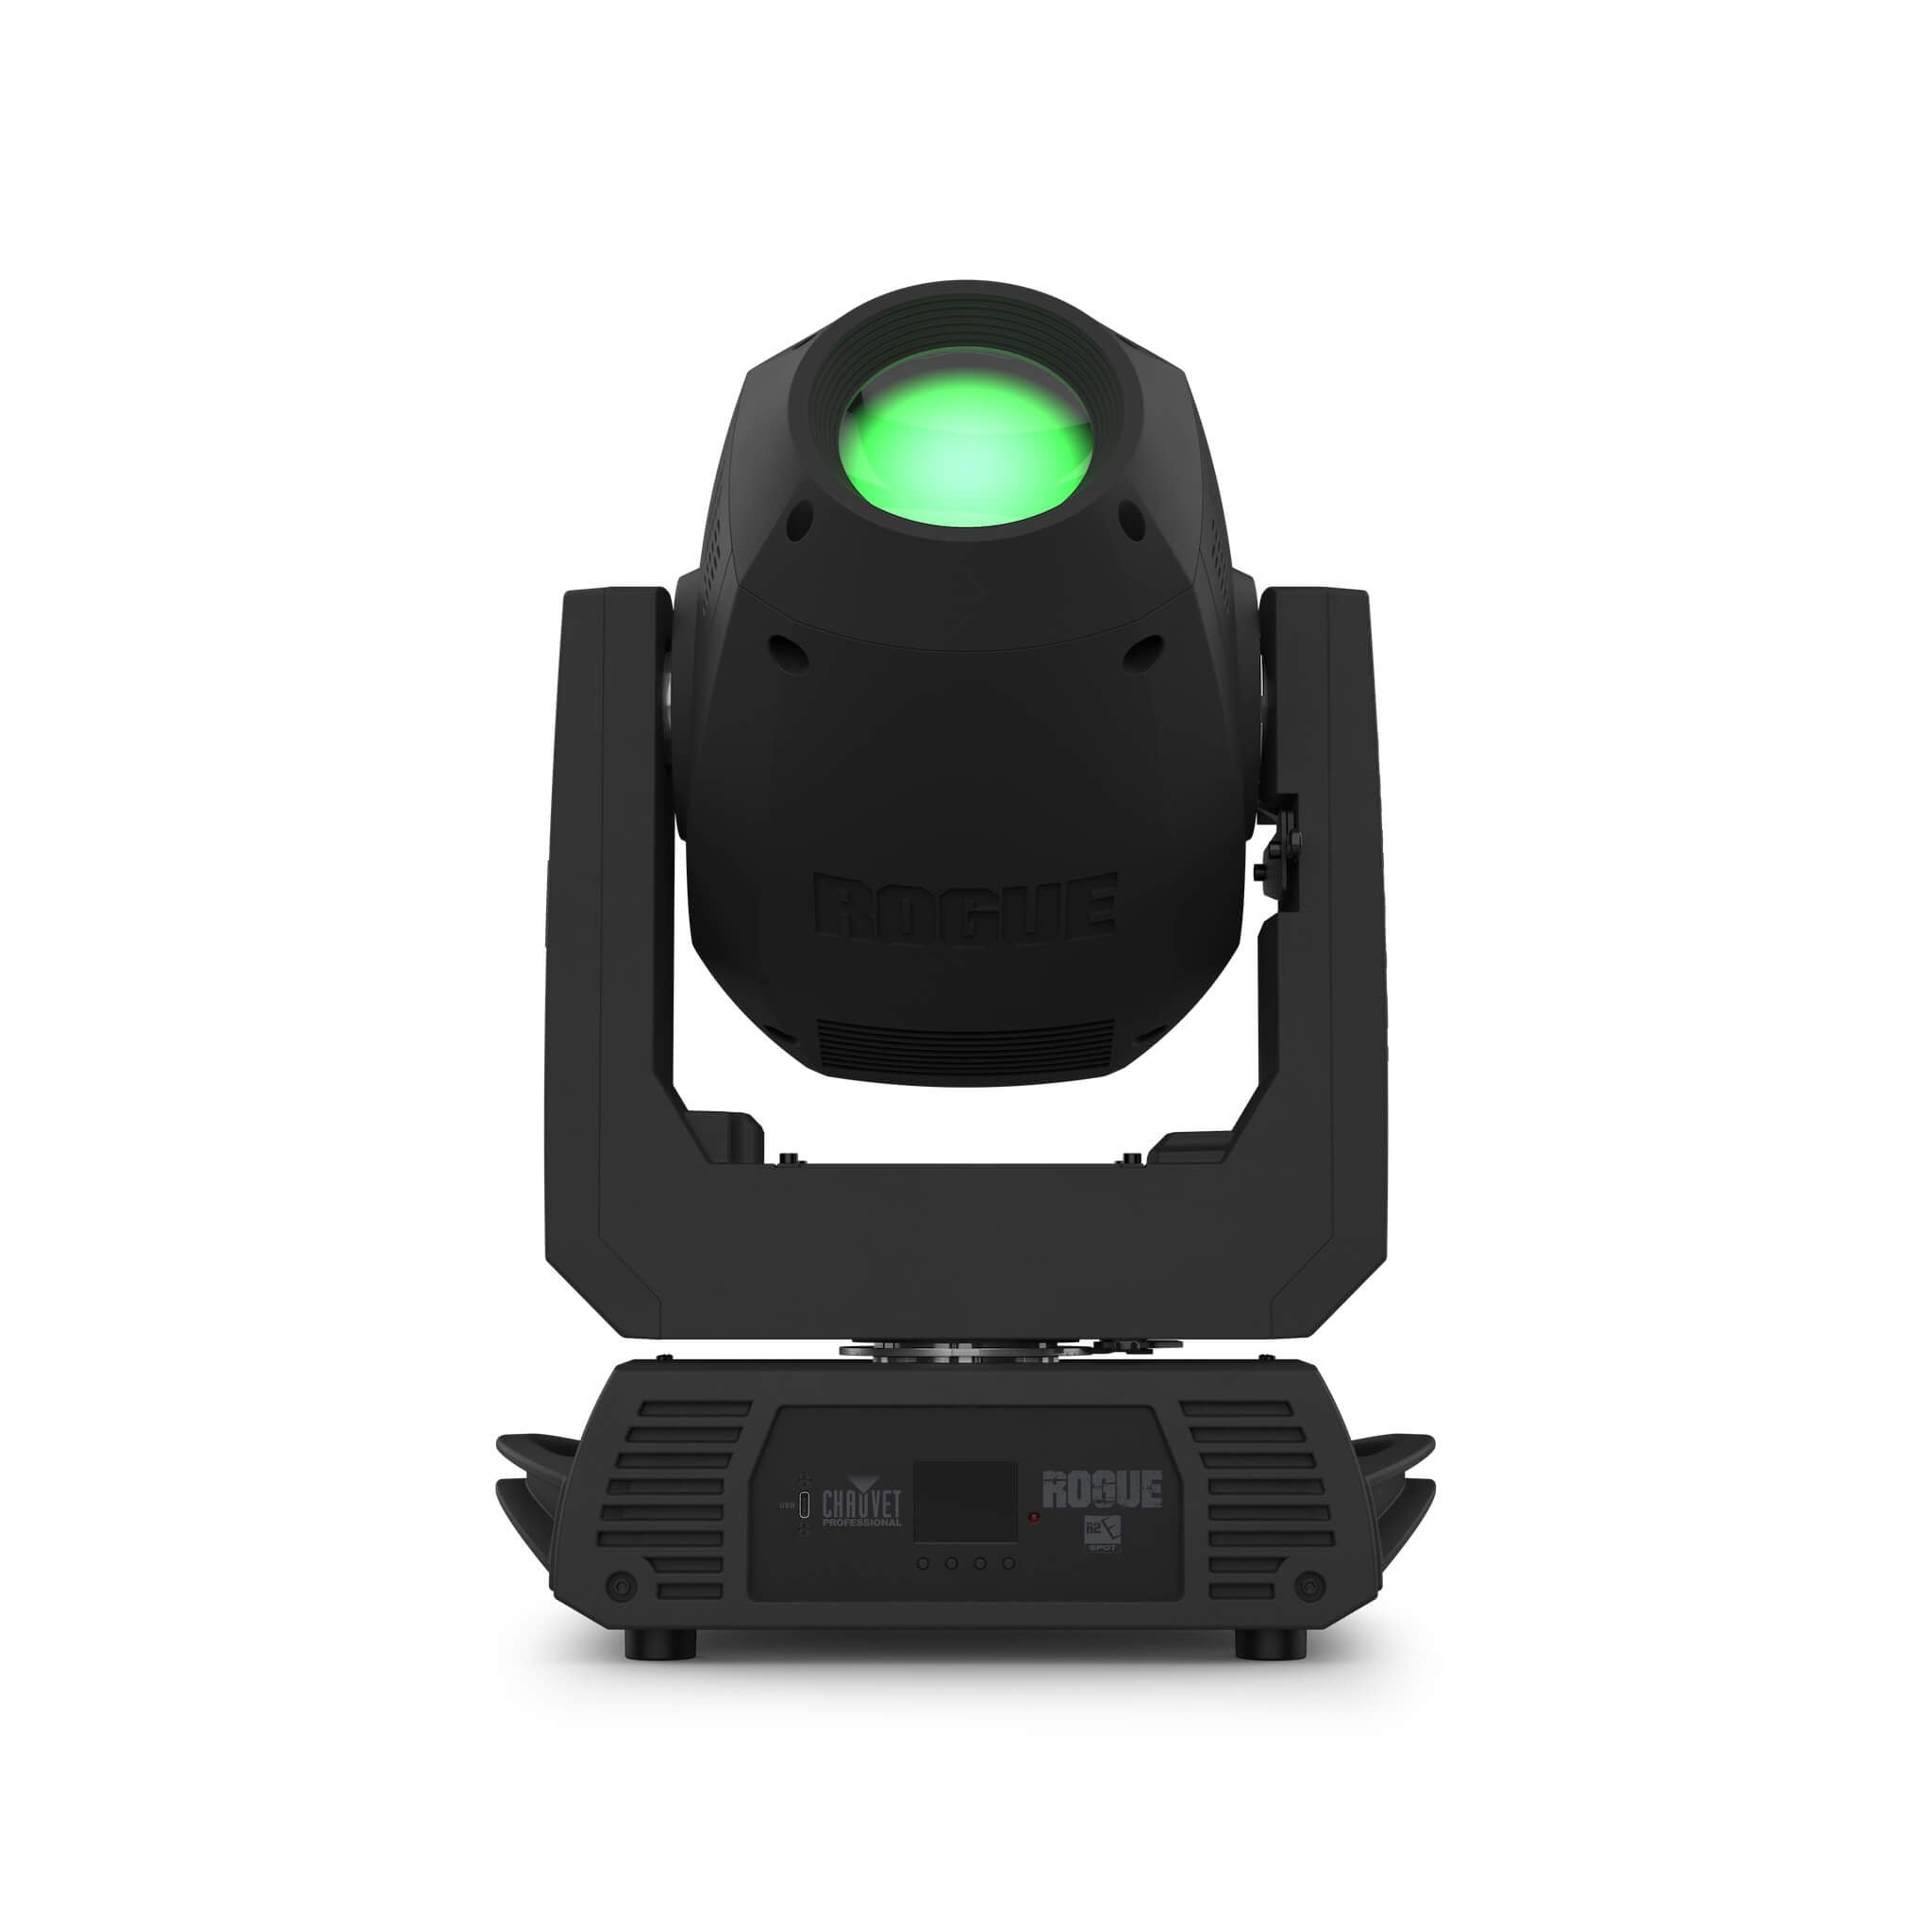 Chauvet Professional Rogue R2E Spot - 350W LED Moving Head Fixture, front